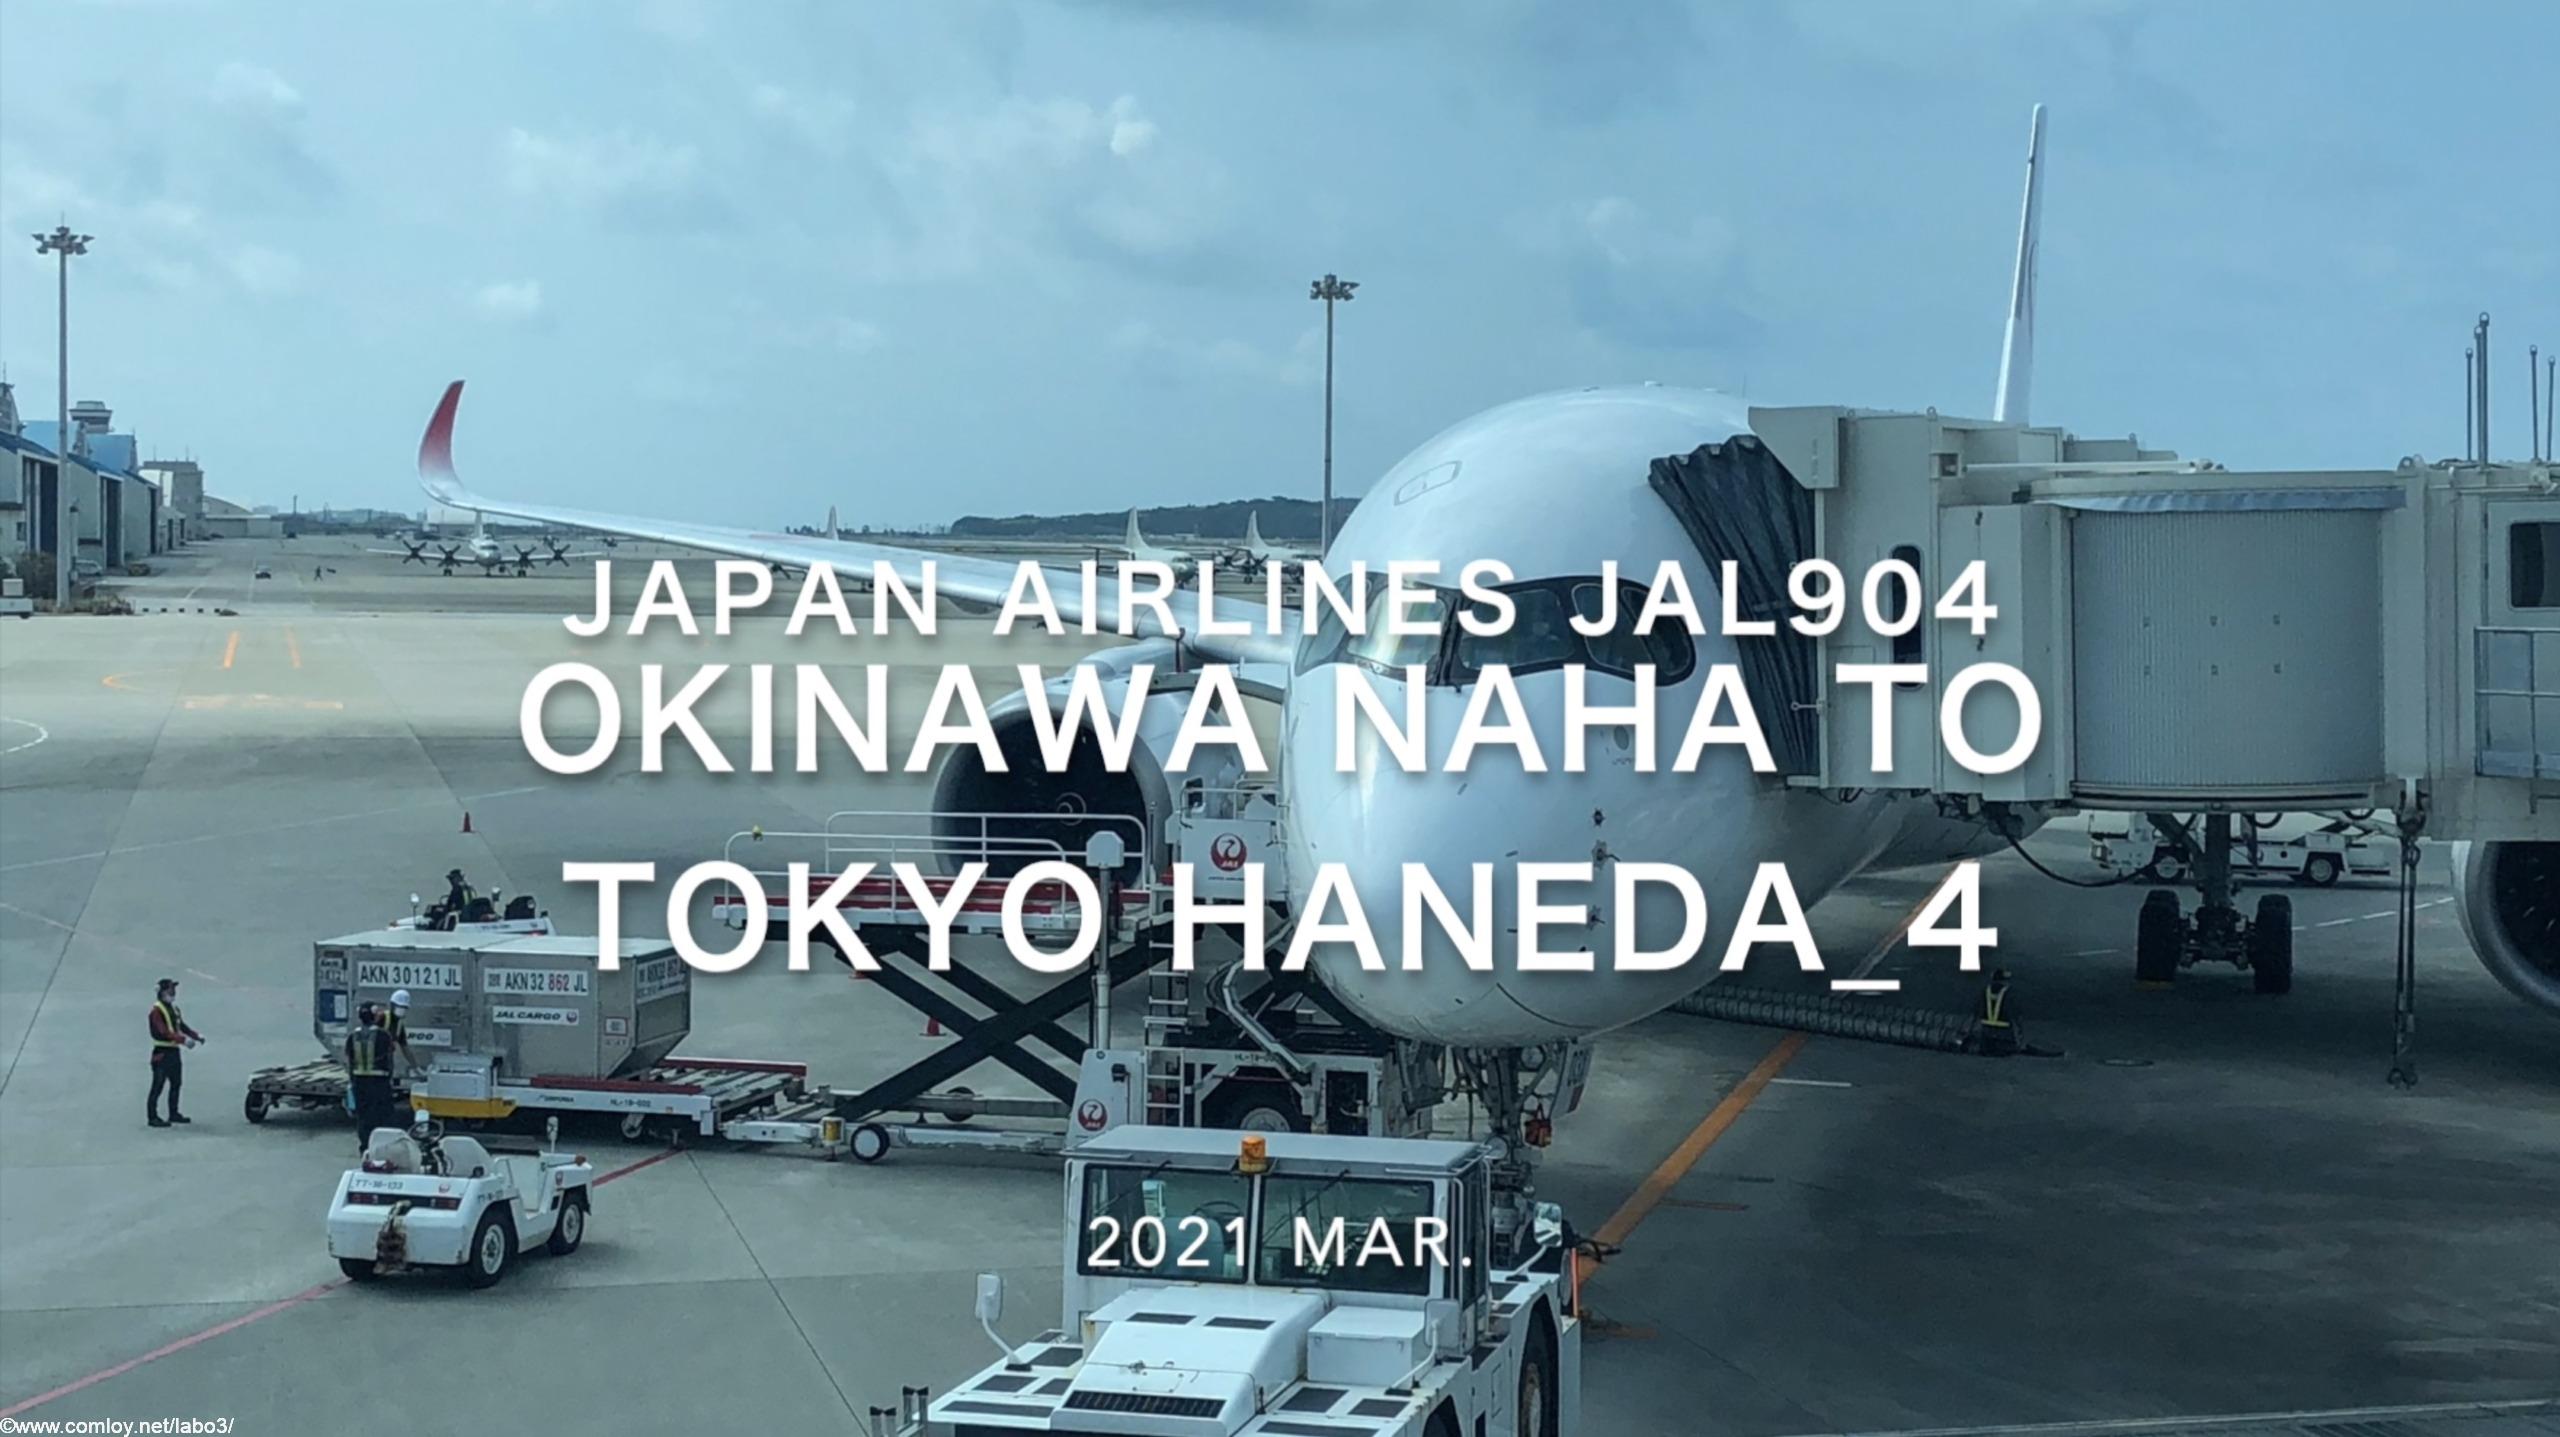 【Flight Report】2021 Mar Japan Airlines JAL904 OKINAWA NAHA TO TOKYO HANEDA_4 日本航空 那覇 - 羽田 搭乗記